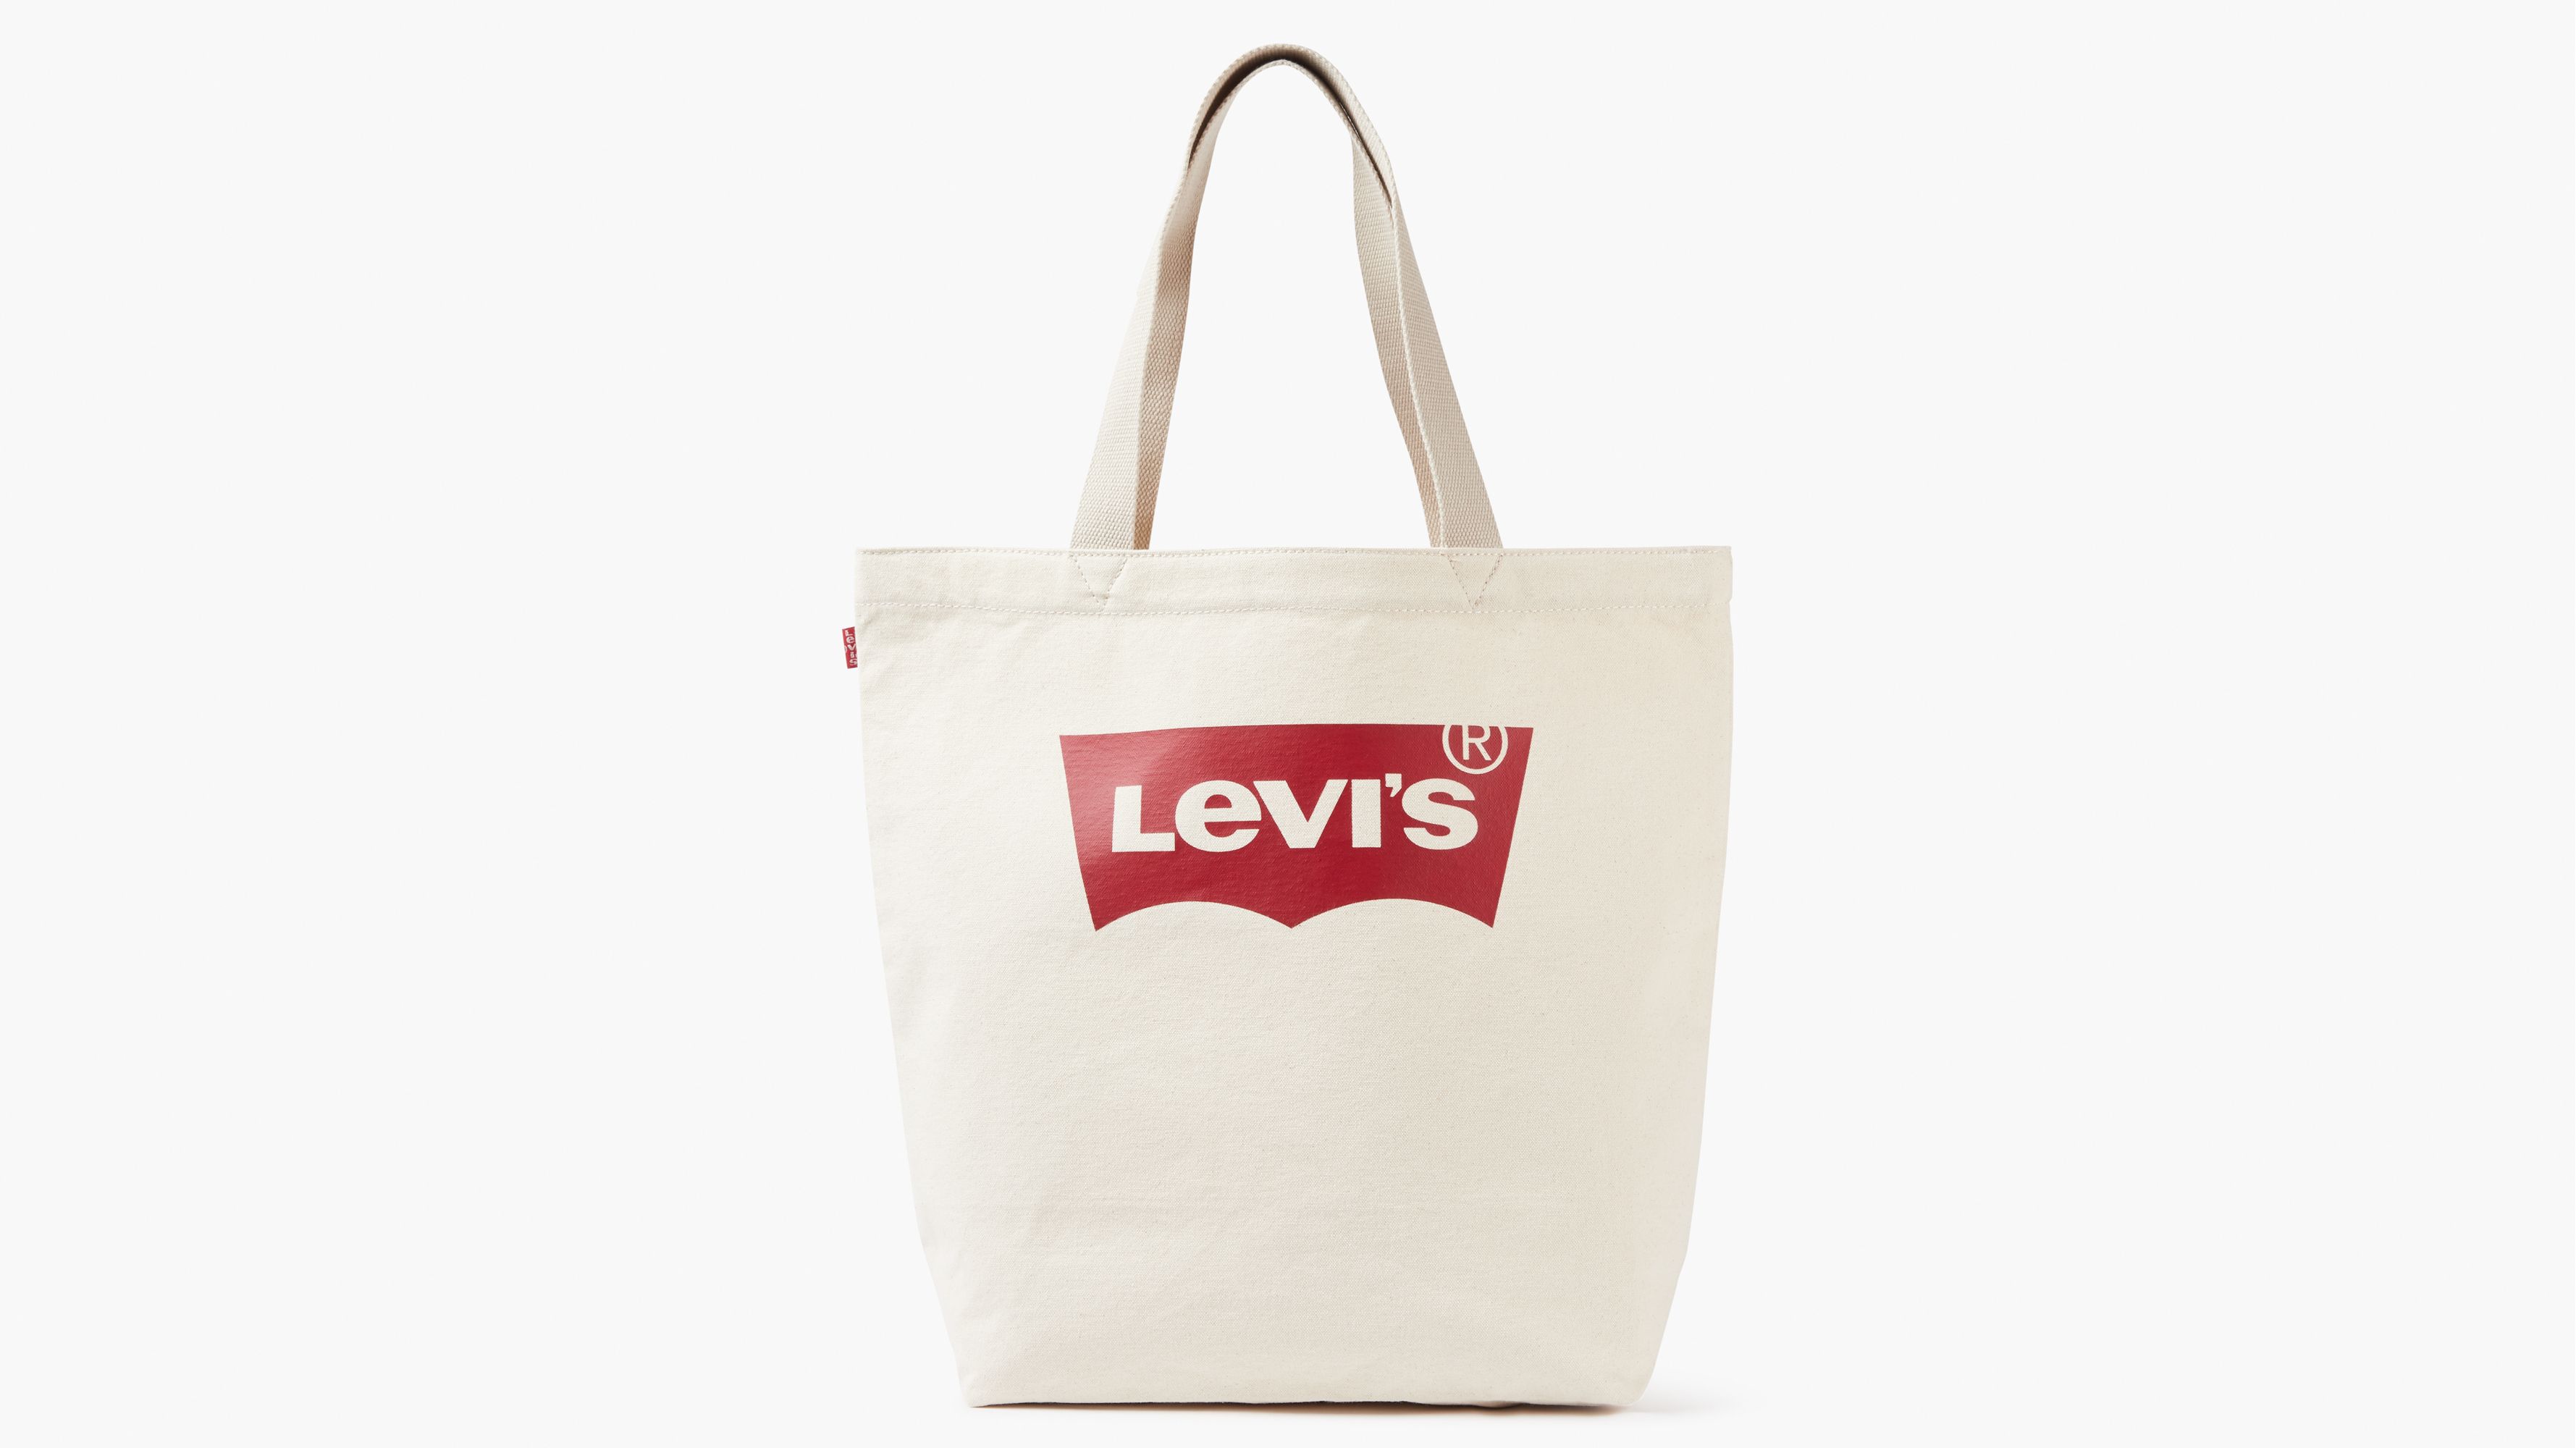 levis sling bag womens